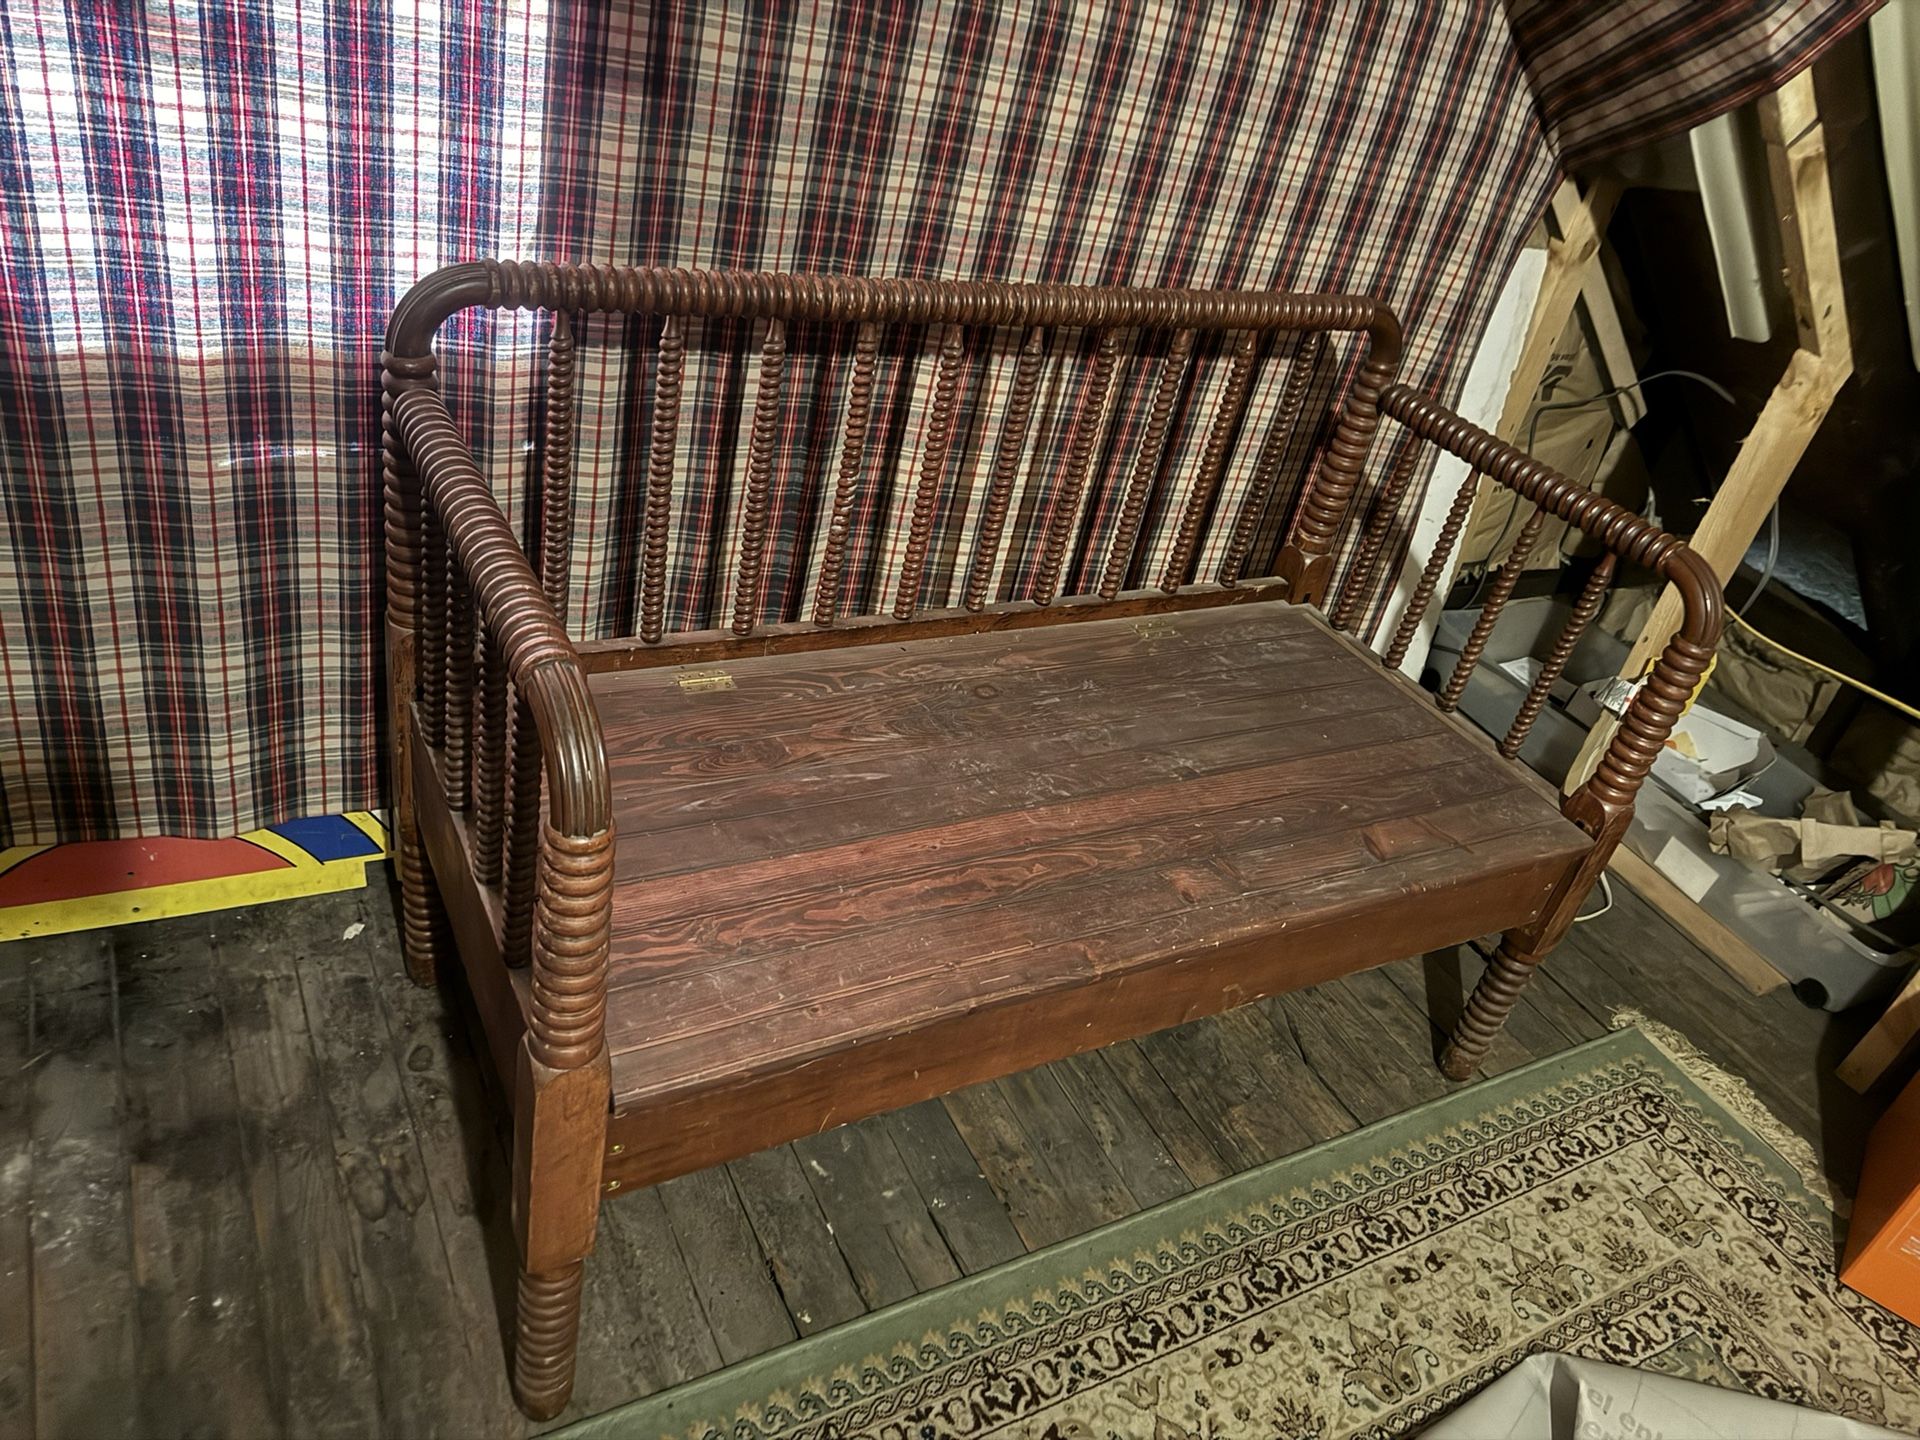 Custom Made Bed Frame Bench 